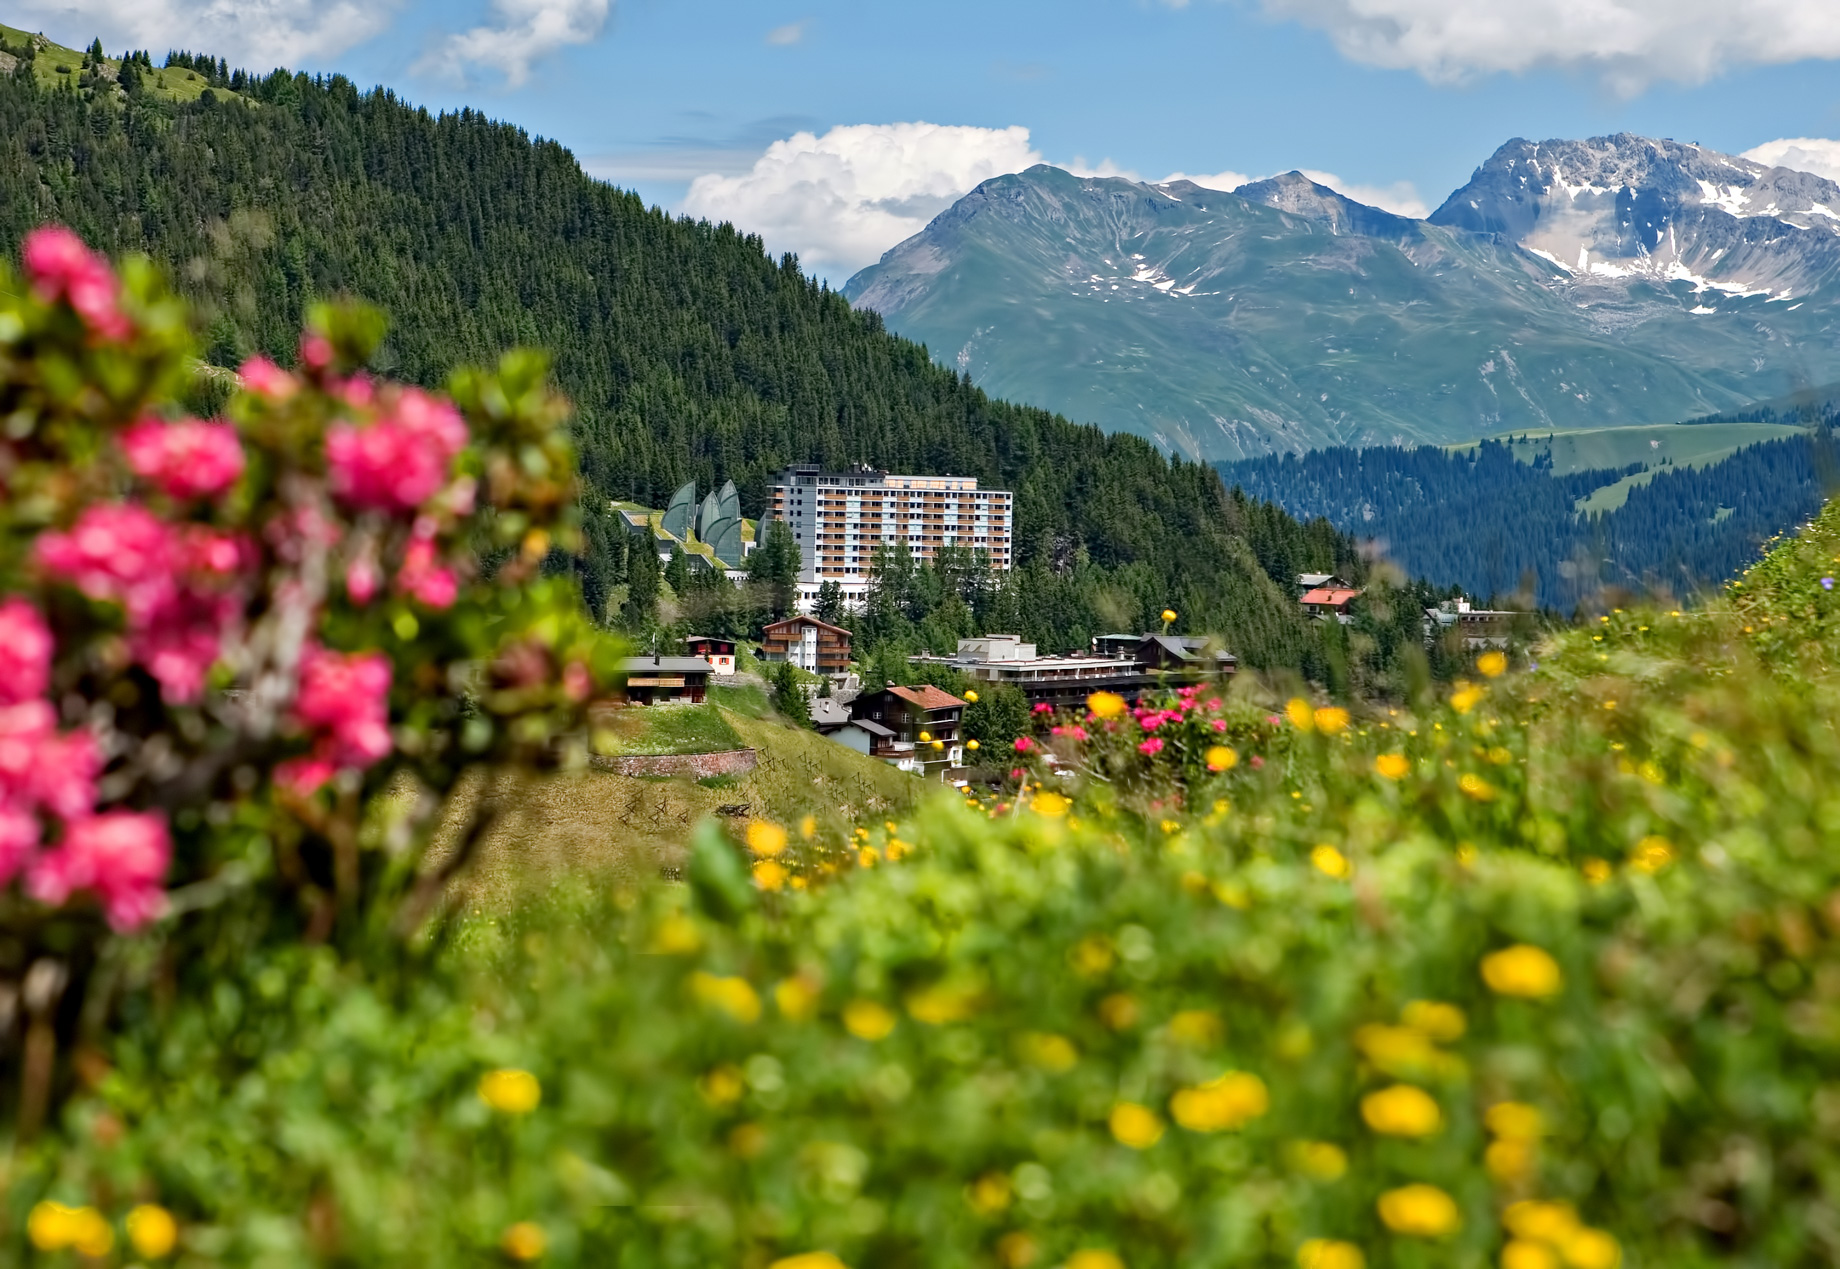 Tschuggen Grand Hotel - Arosa, Switzerland - Summer View